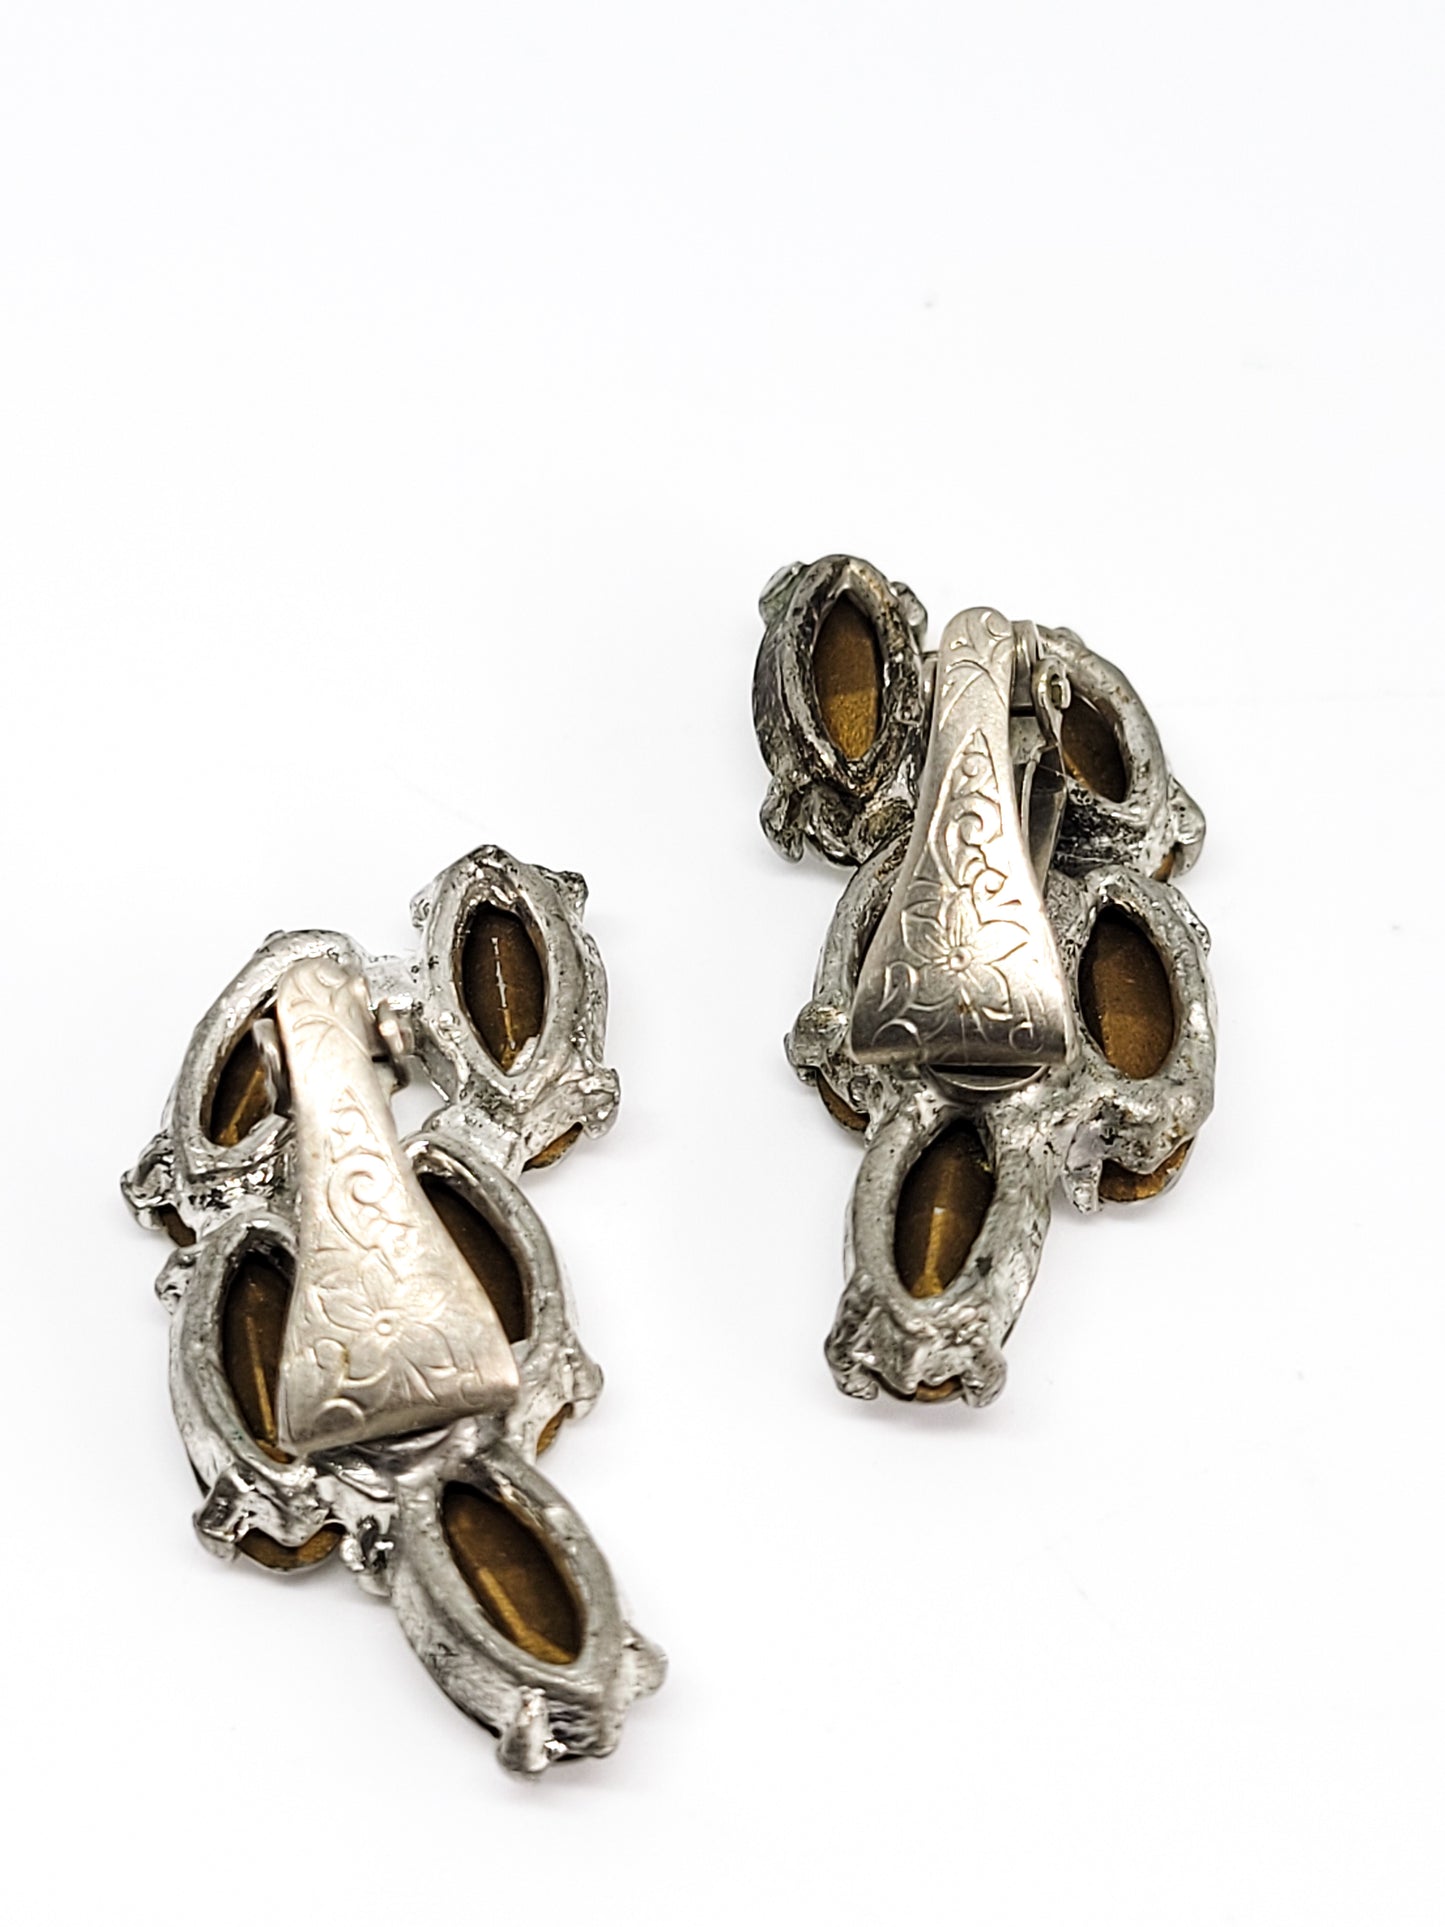 Bright clear rhinestone cluster earrings Pat number 1967965